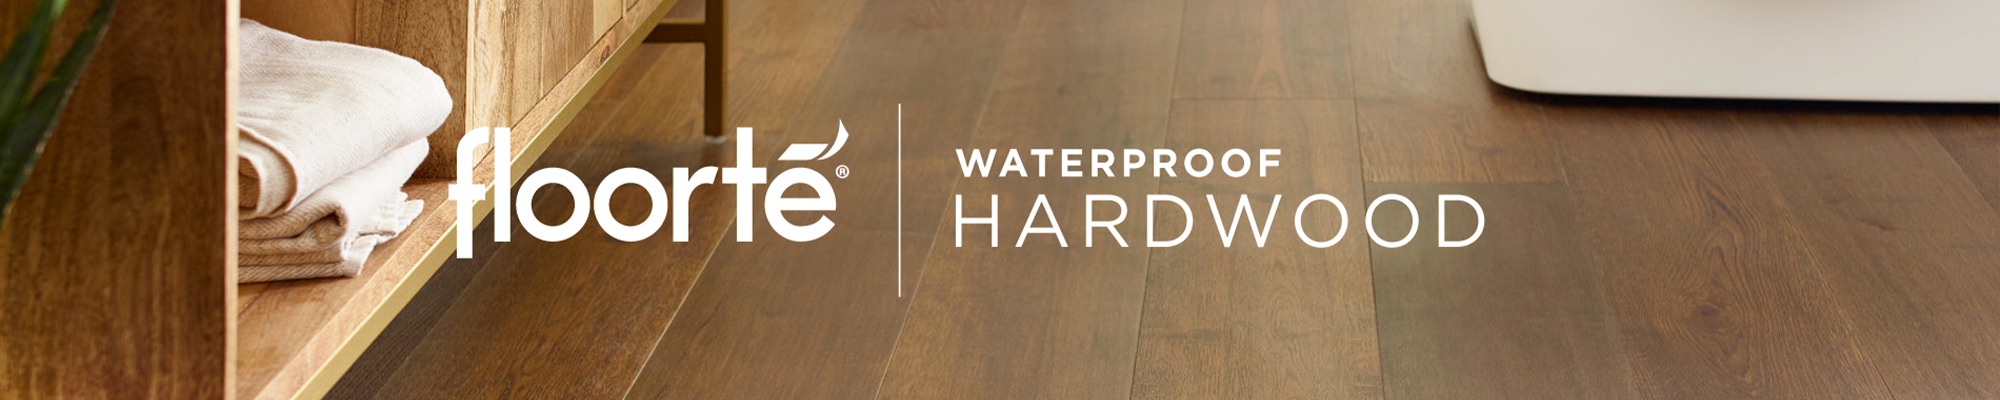 floorte waterproof hardwood graphic